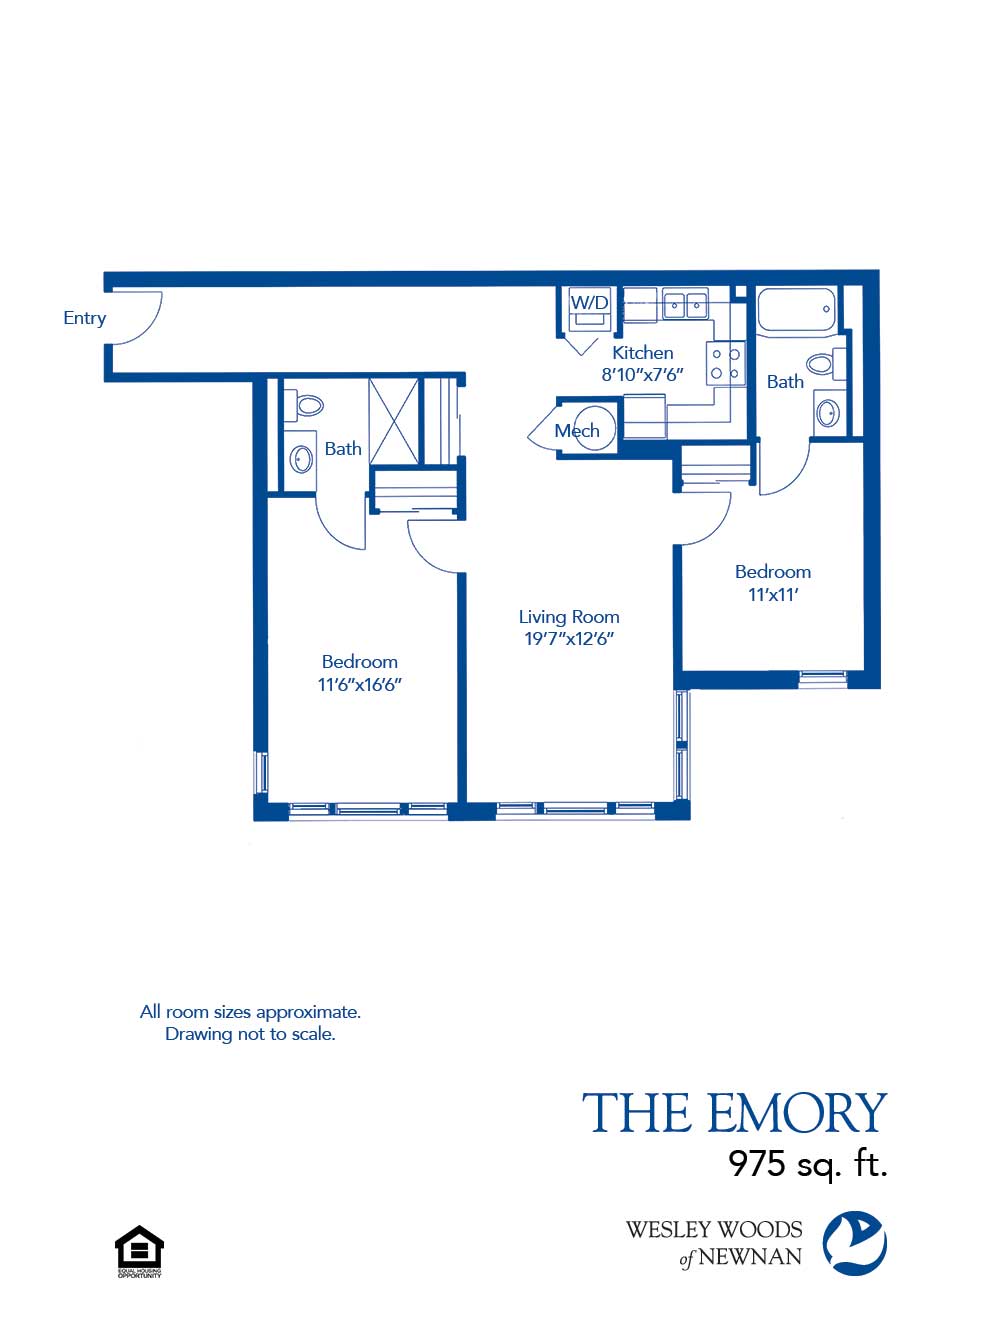 The Emory floor plan